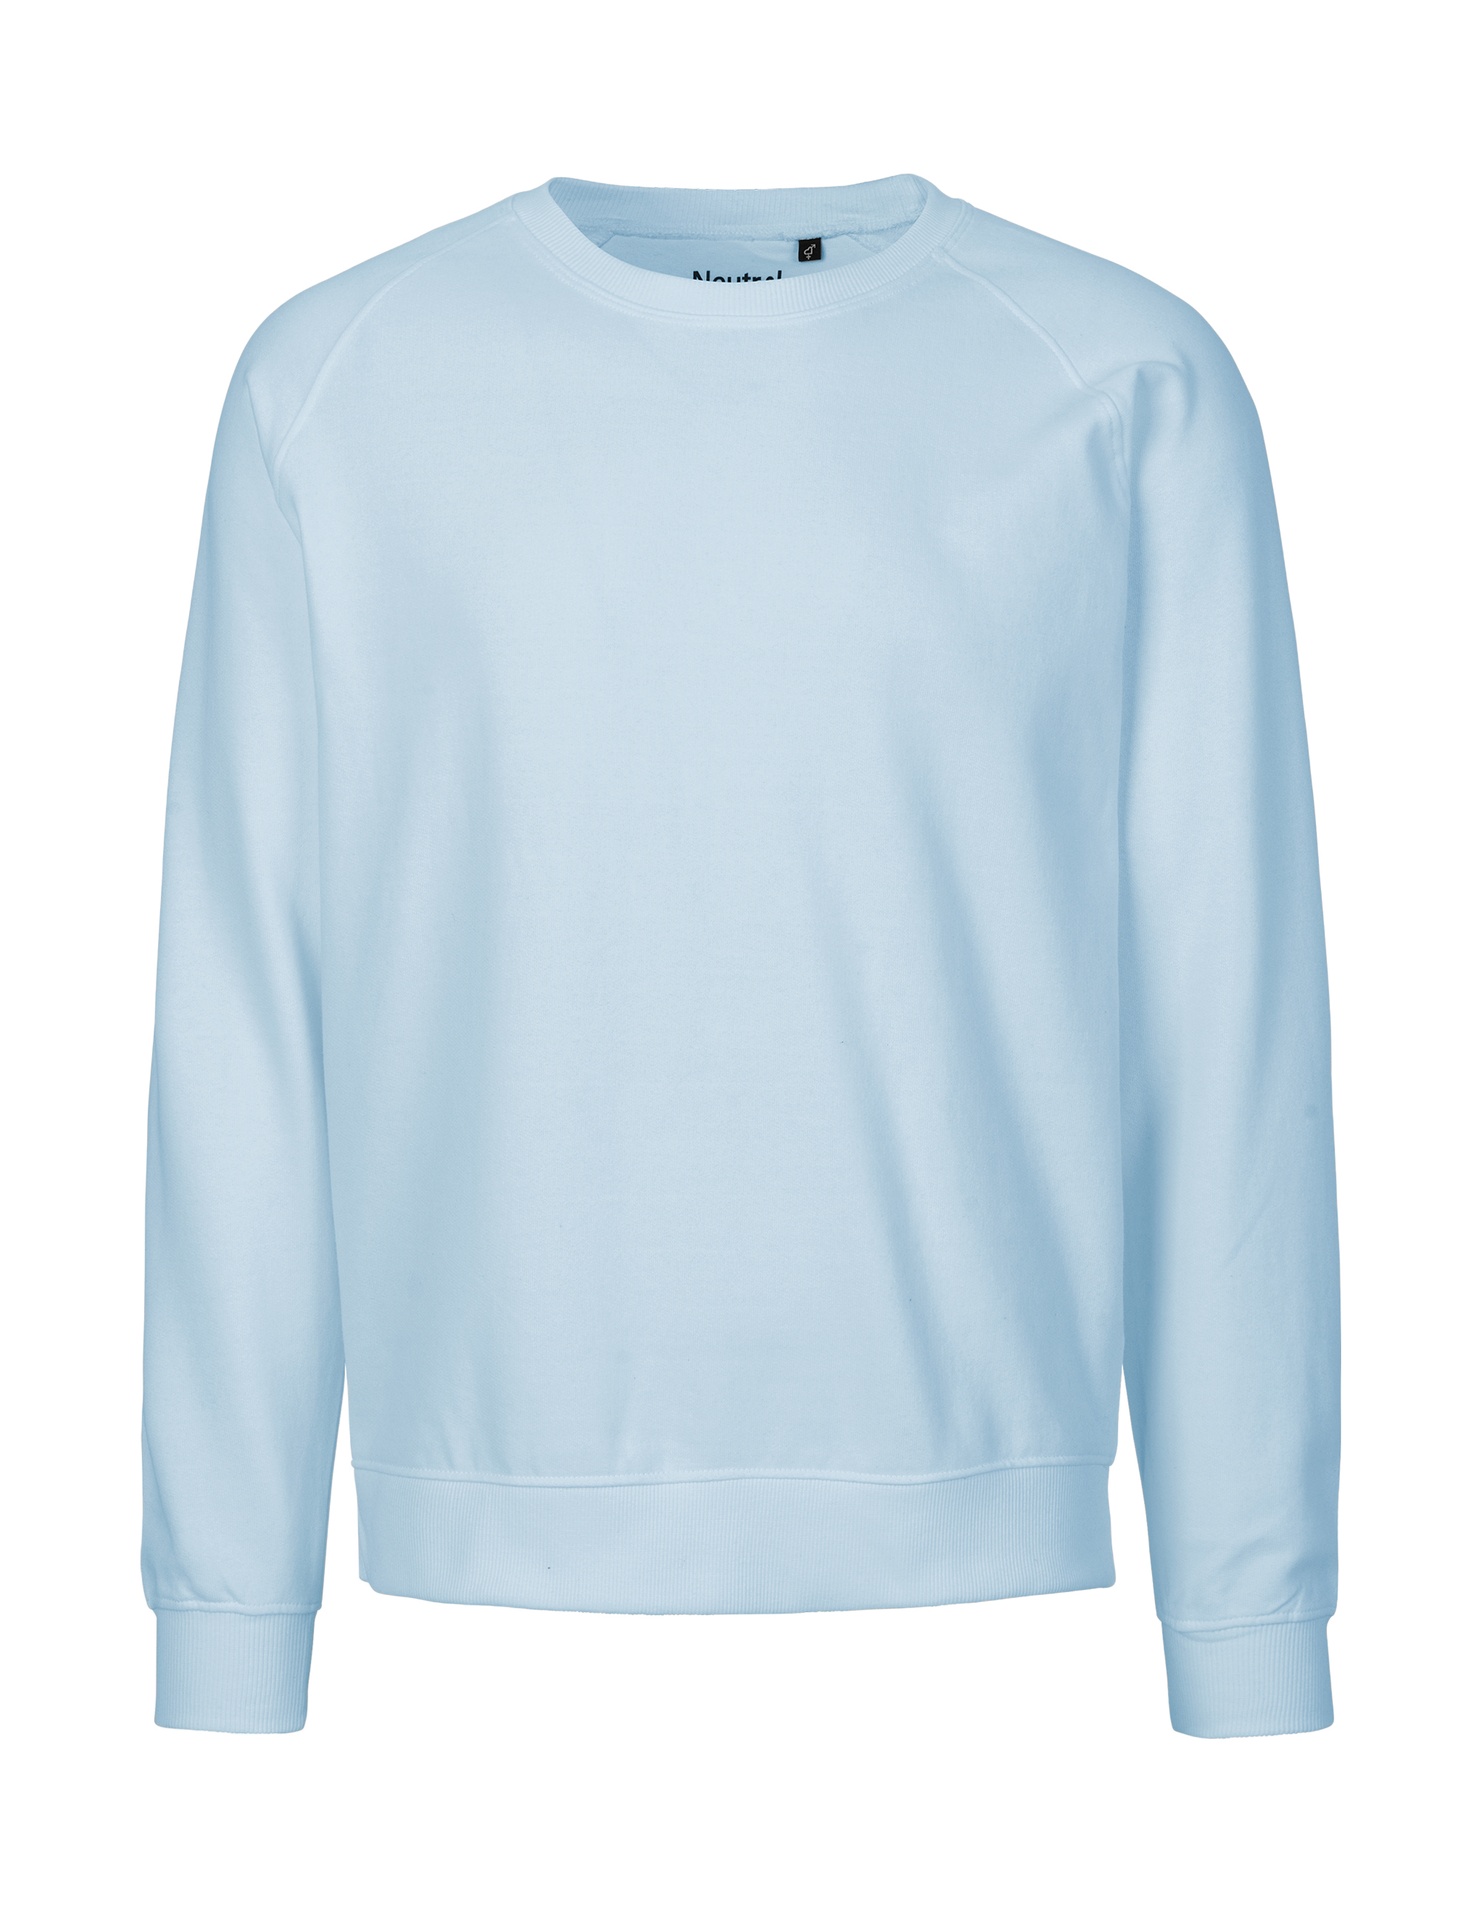 [PR/02892] Unisex Sweatshirt (Light Blue 69, 3XL)